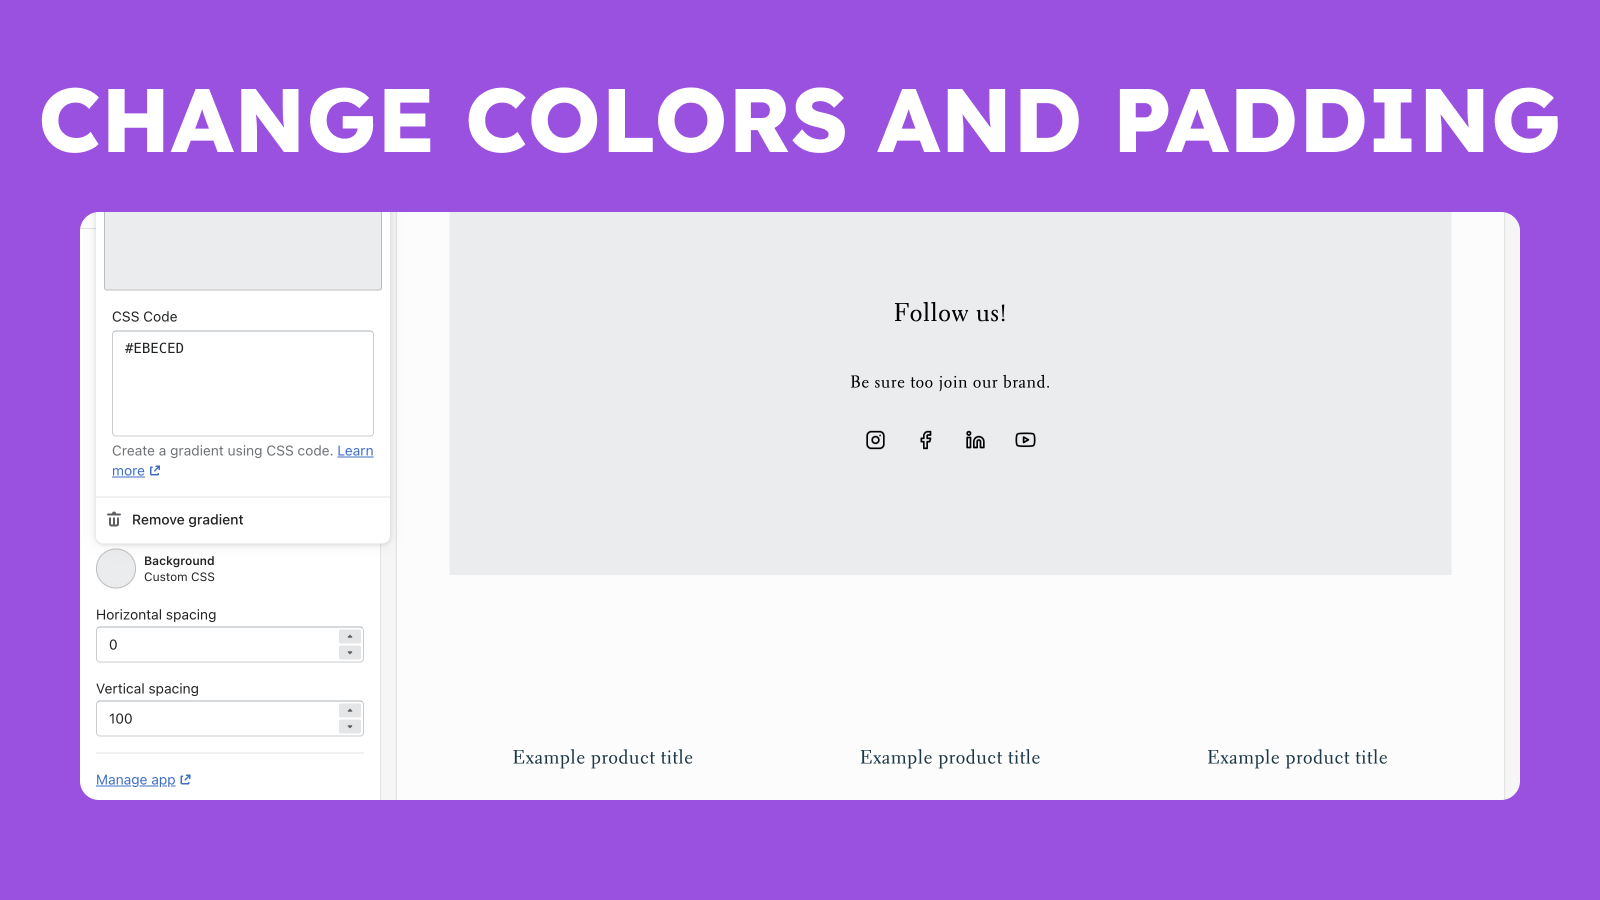 Floox Social Networks Easy App - Farb- und Abstandverwaltung